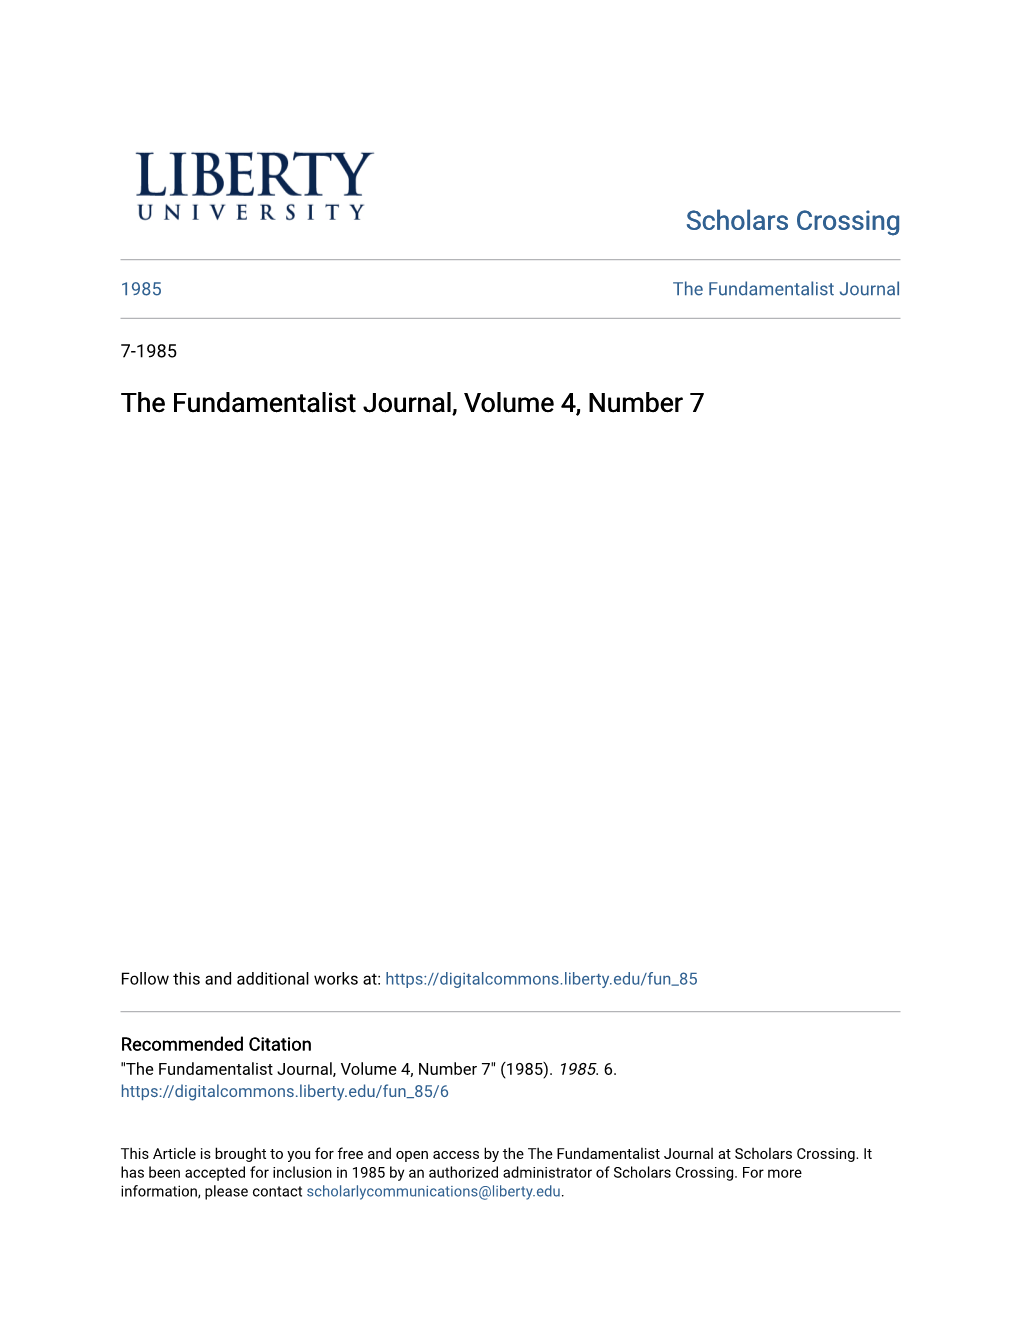 The Fundamentalist Journal, Volume 4, Number 7